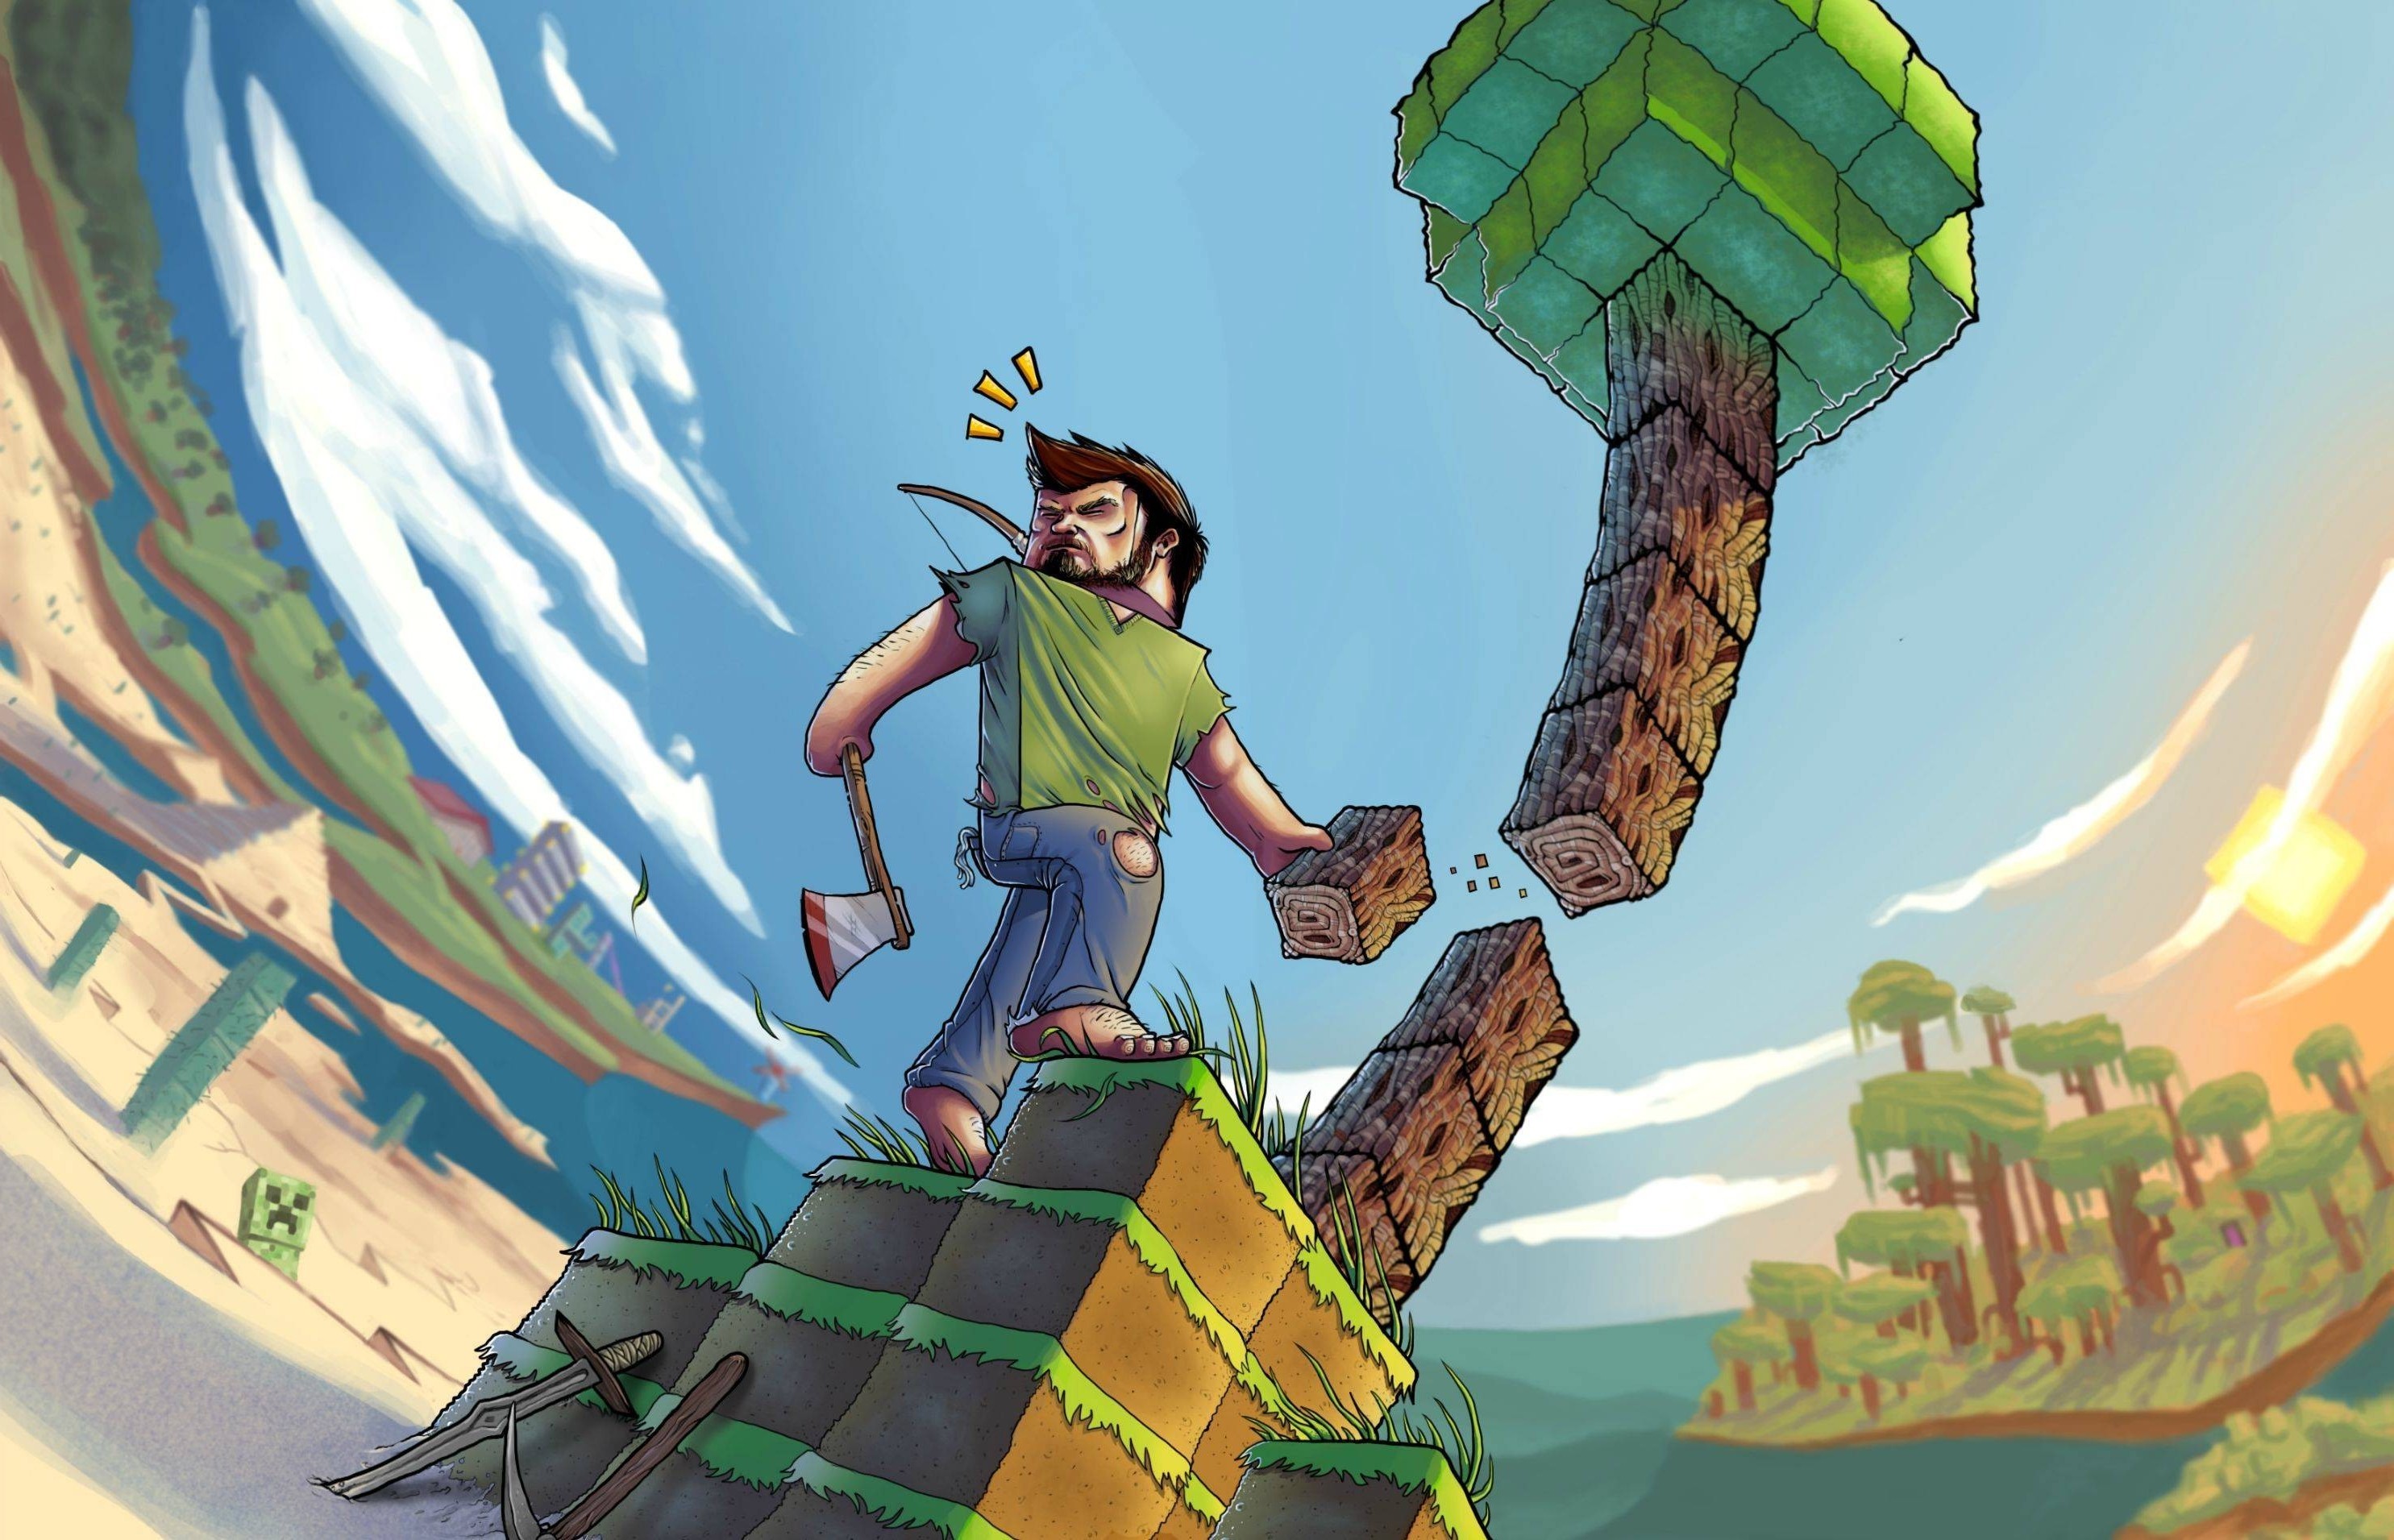  Minecraft  Artwork Video Games  Wallpapers  HD  Desktop 